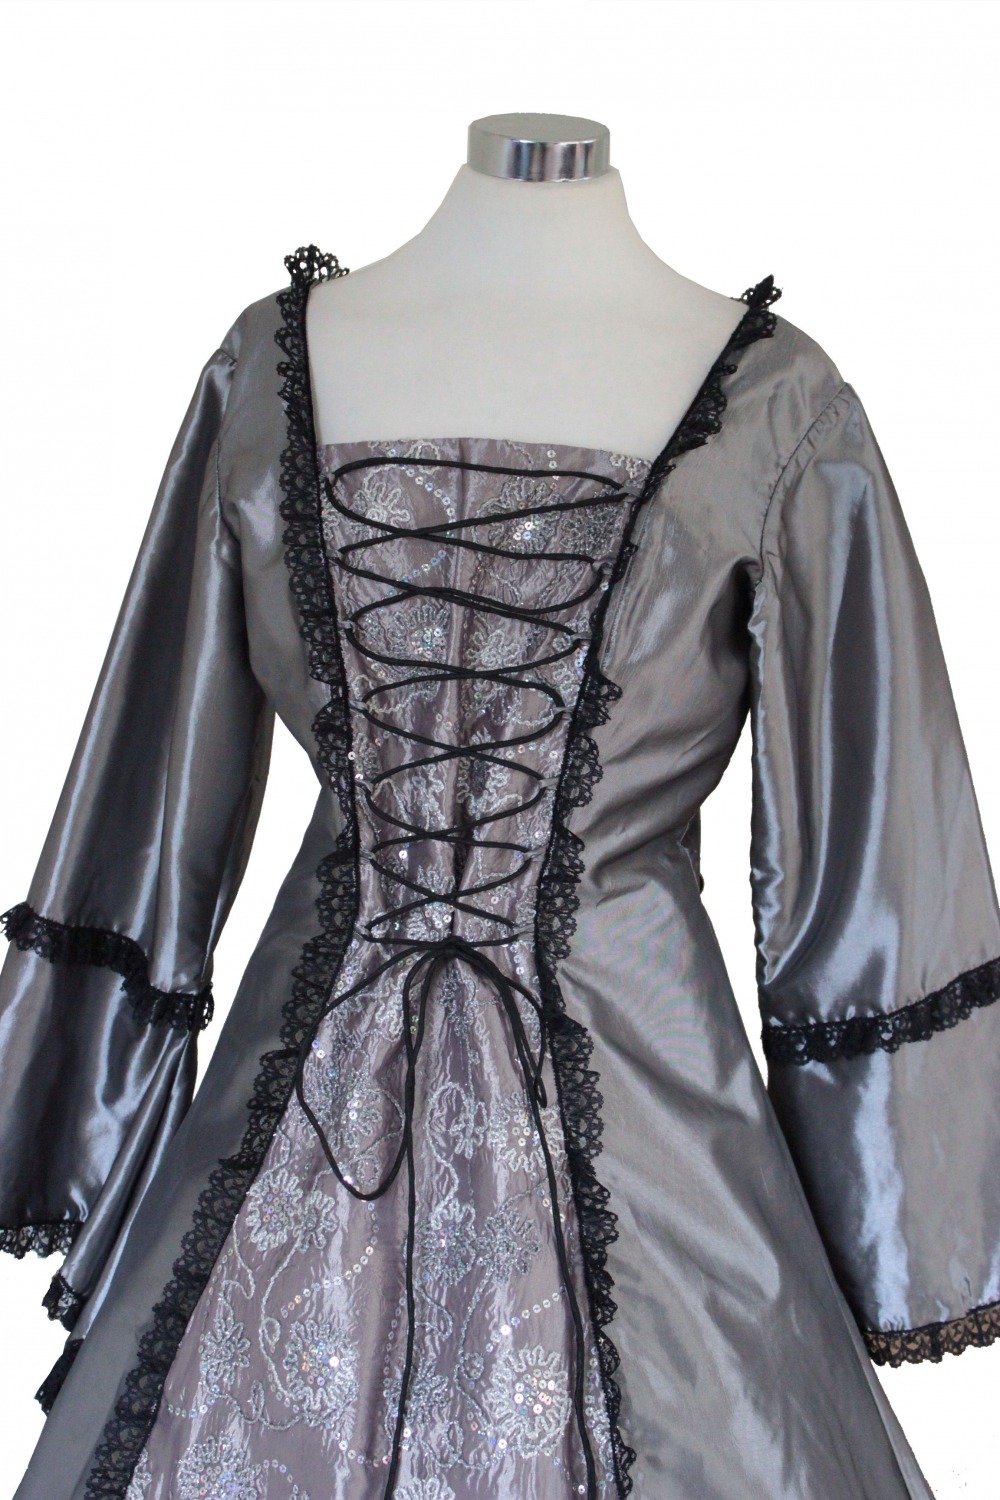 Ladies Medieval Renaissance Tudor Costume Size 24 - 26 Image